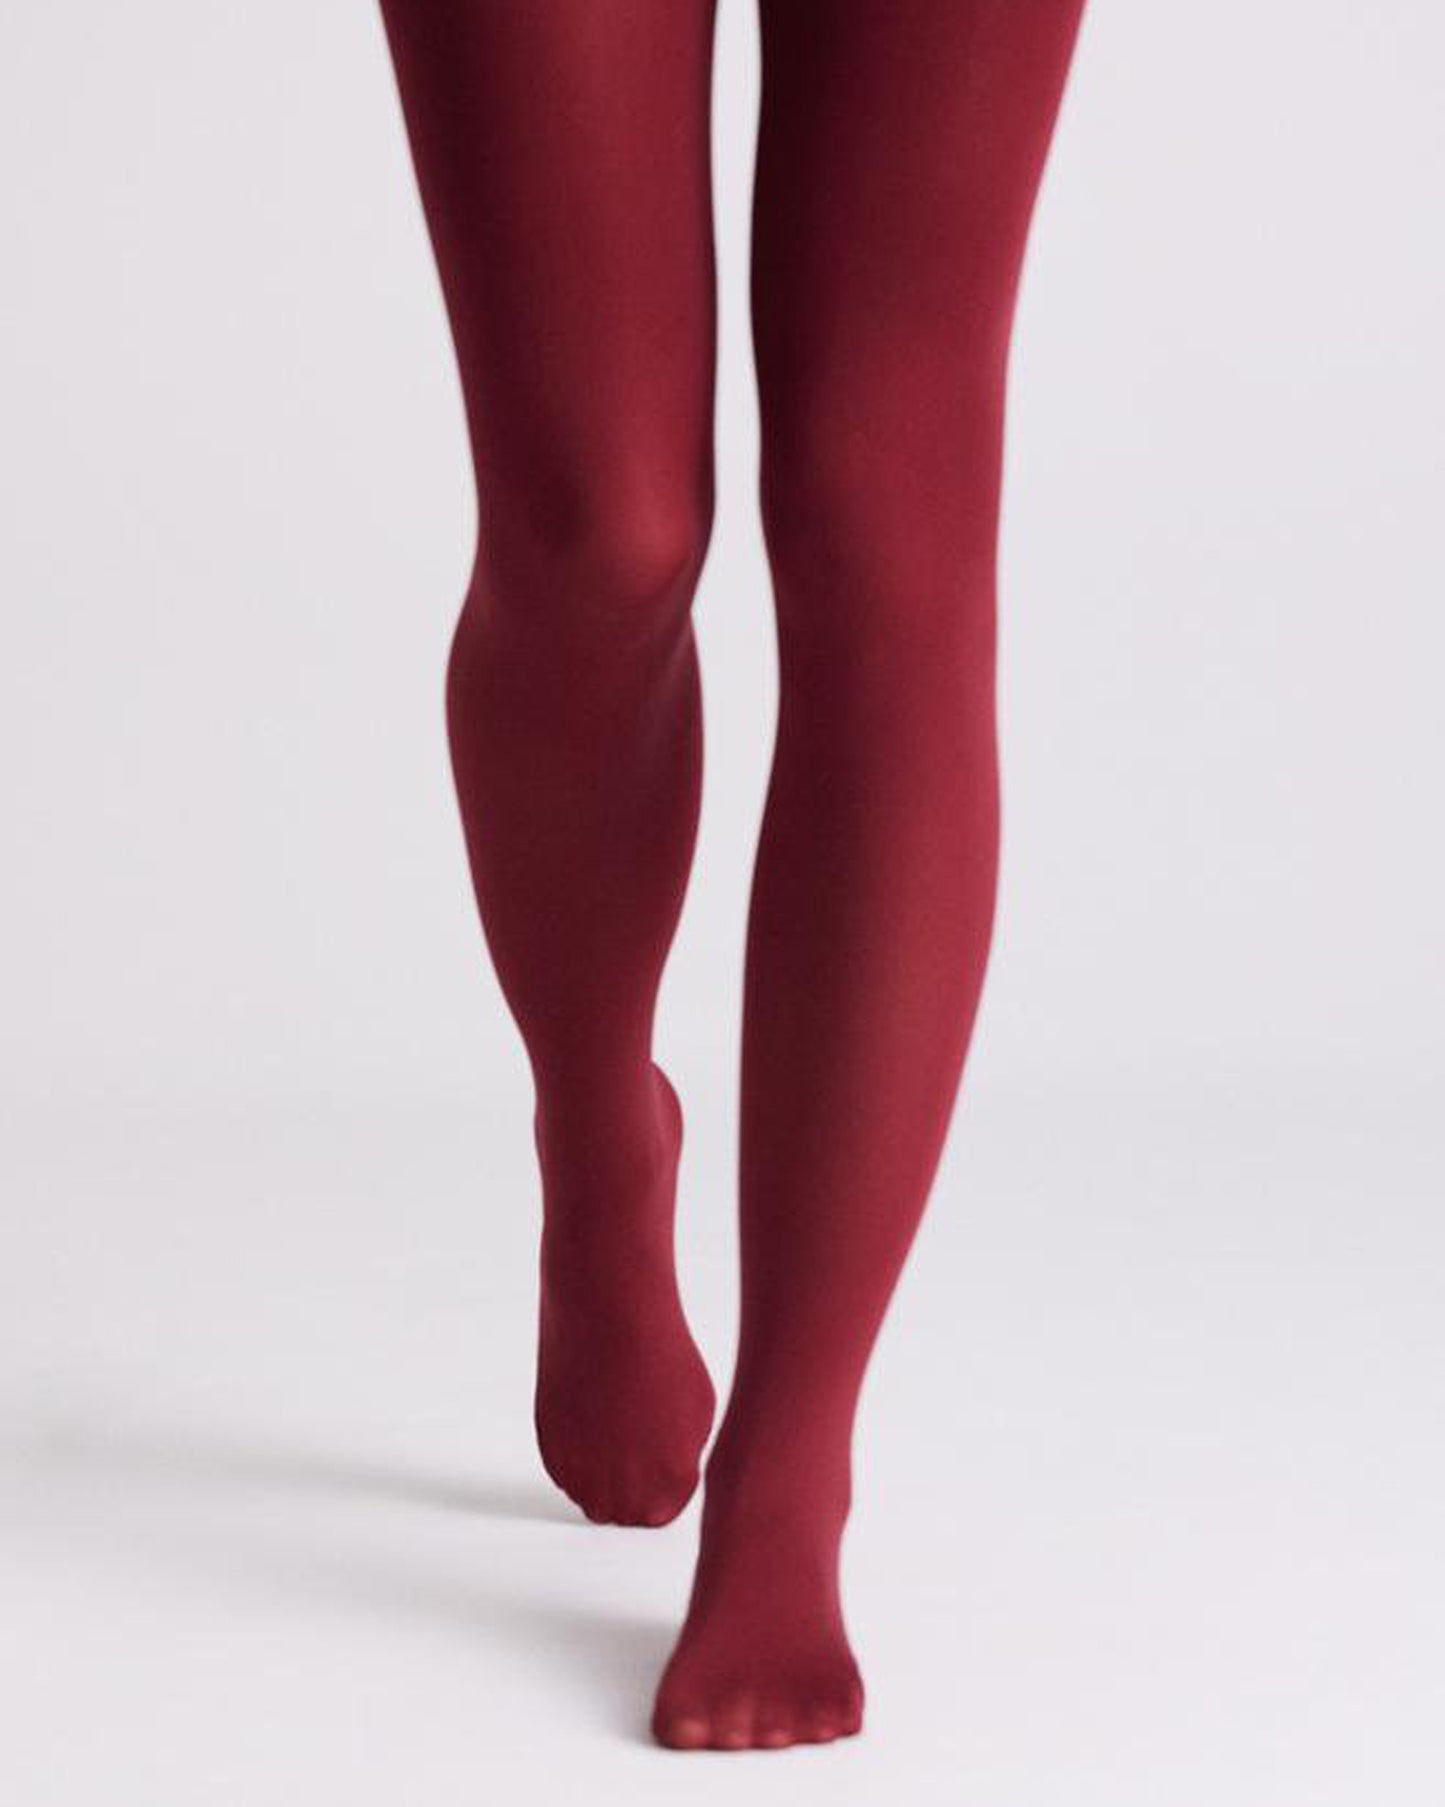 Ysabel Mora 16838 Activa 70 Den Tights - Ysabel Mora Activa 70 Panty - plain matte opaque tights in a dark red / maroon.